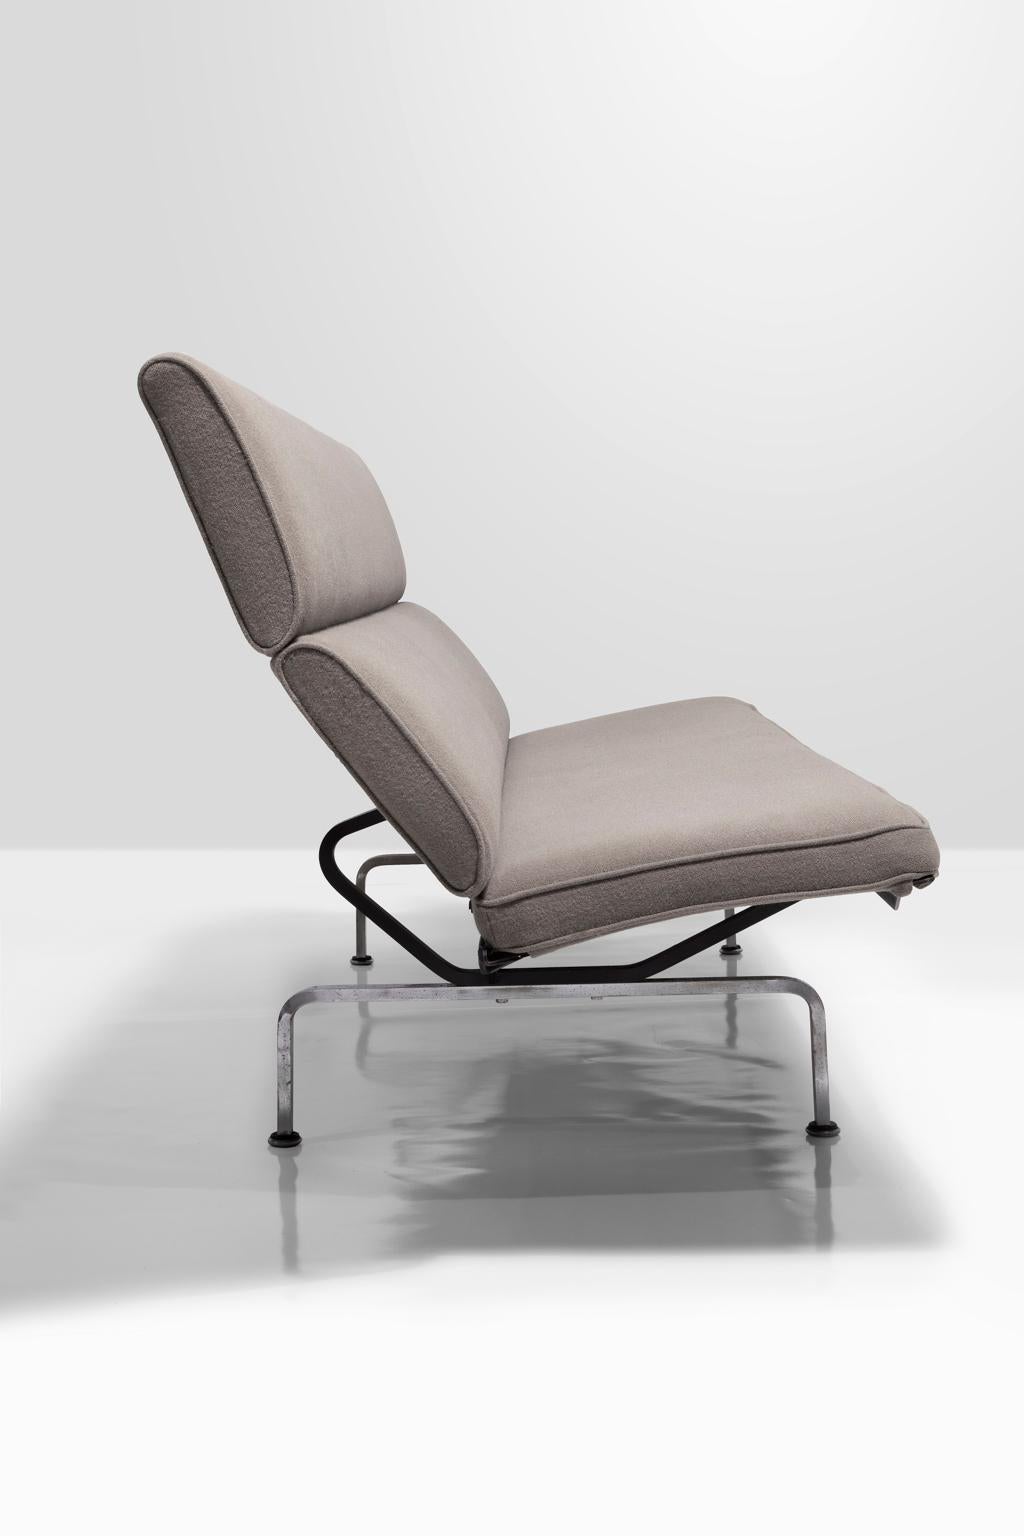 Américain « Compact Sofa » Ray & Charles Eames cadeau Godparents à Eric Saarinen en vente